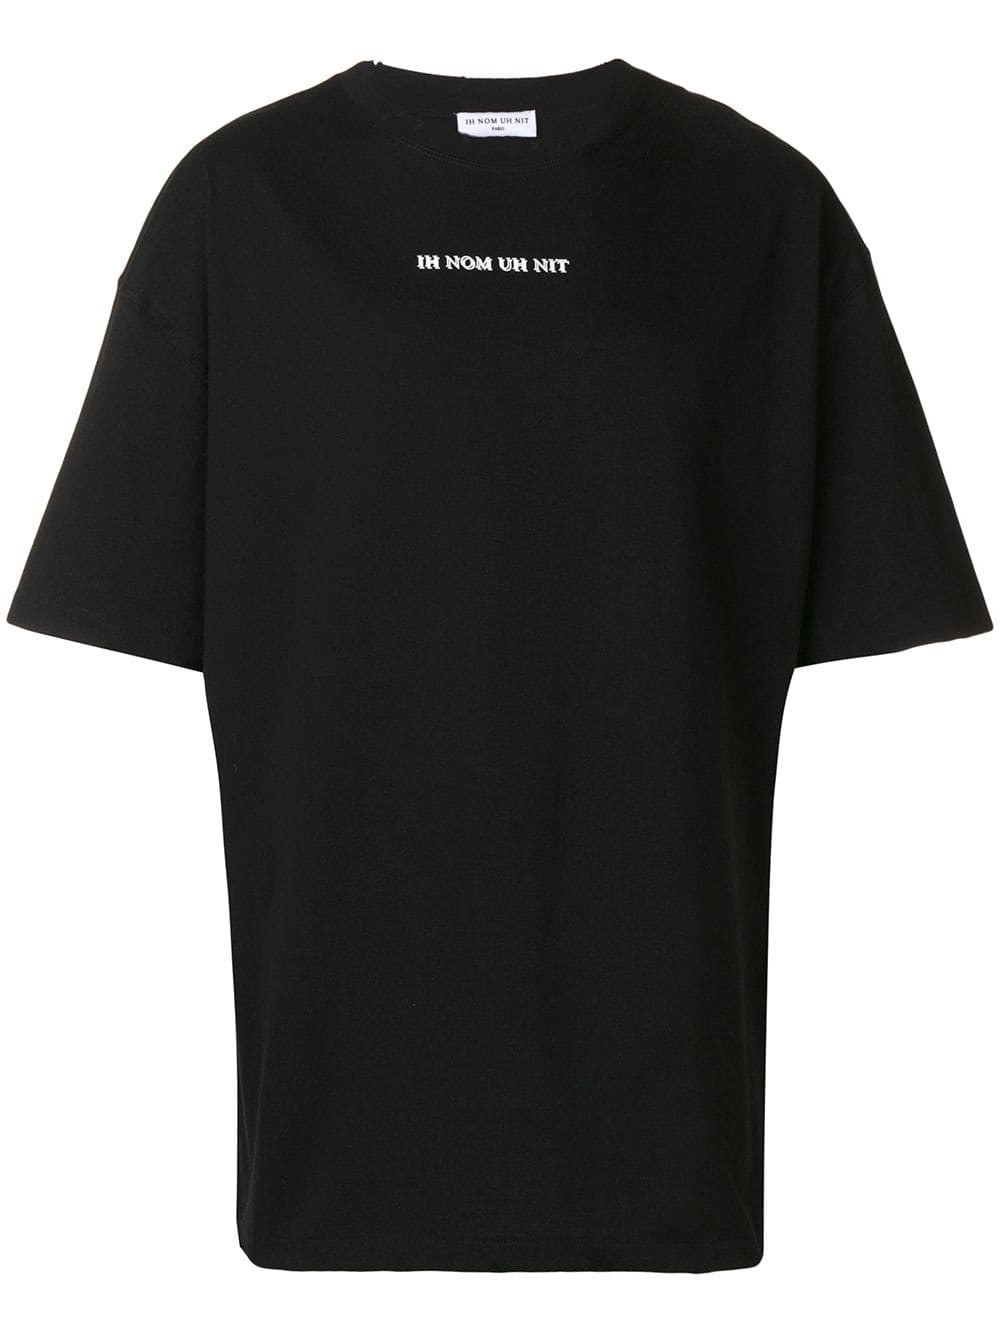 Ih Nom Uh Nit 印花短袖t恤 In Black | ModeSens